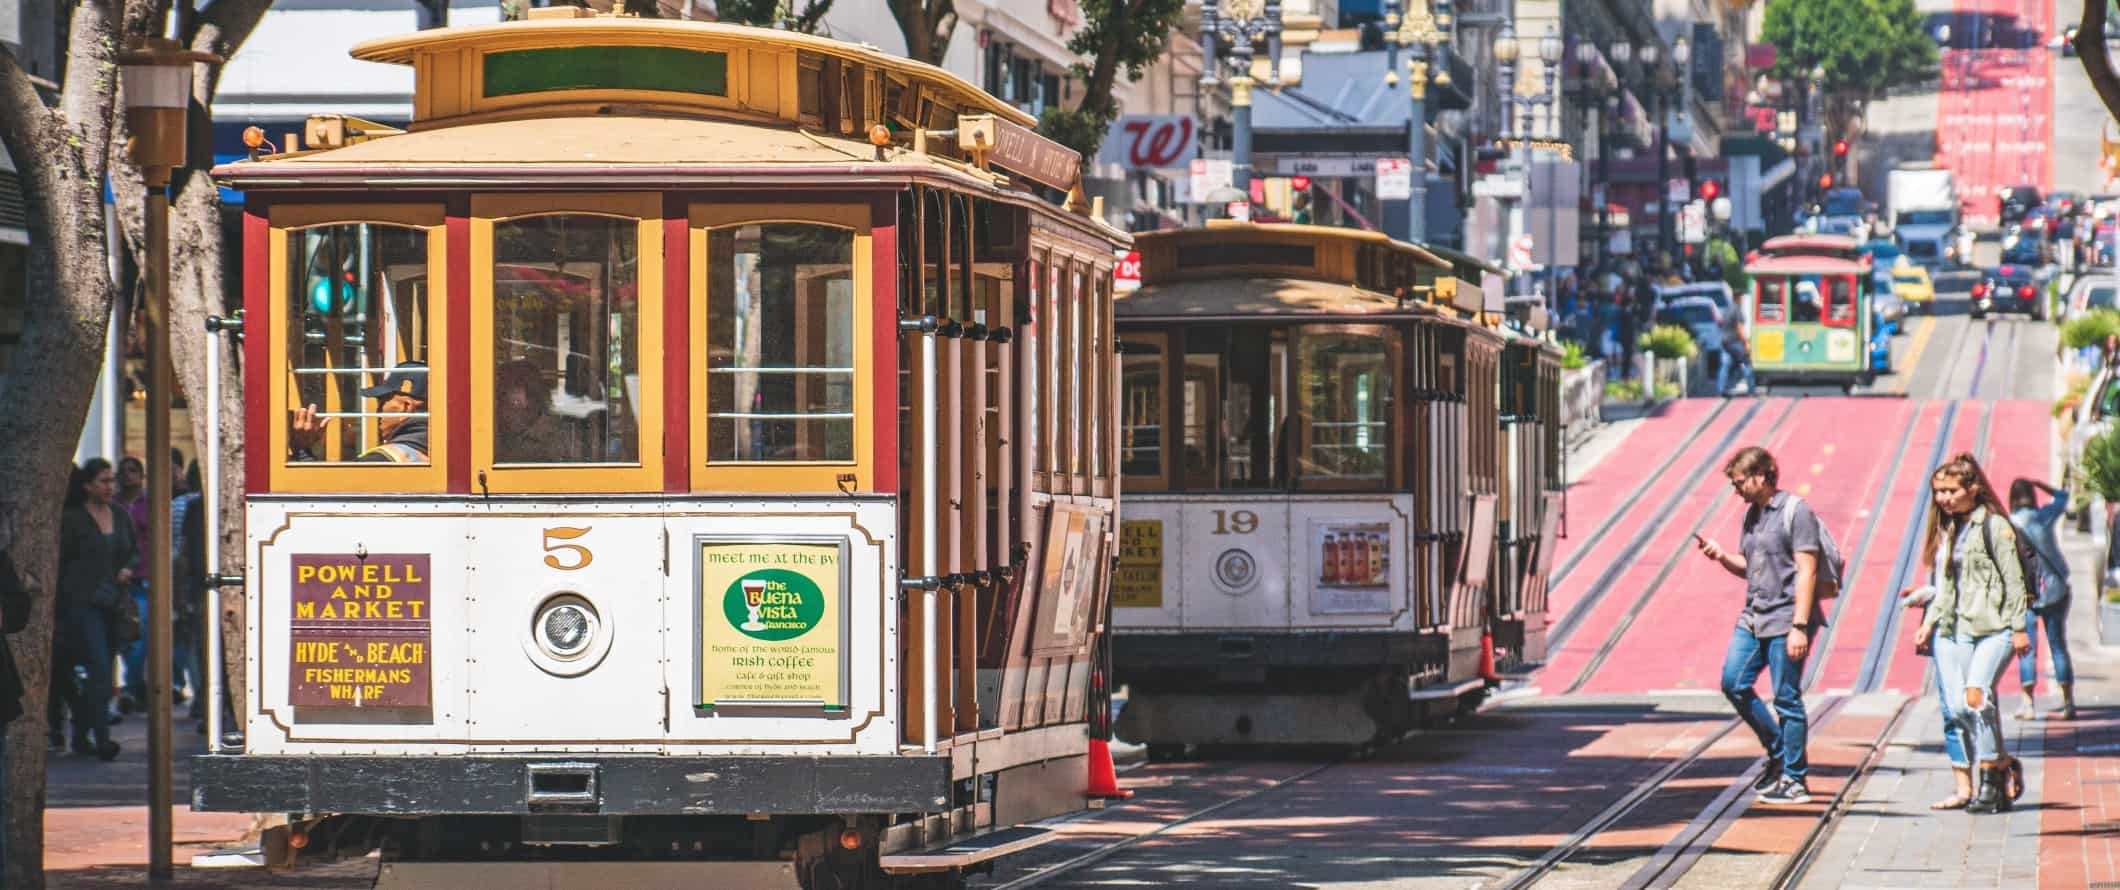 People boarding two historic trolleys in San Francisco, California.